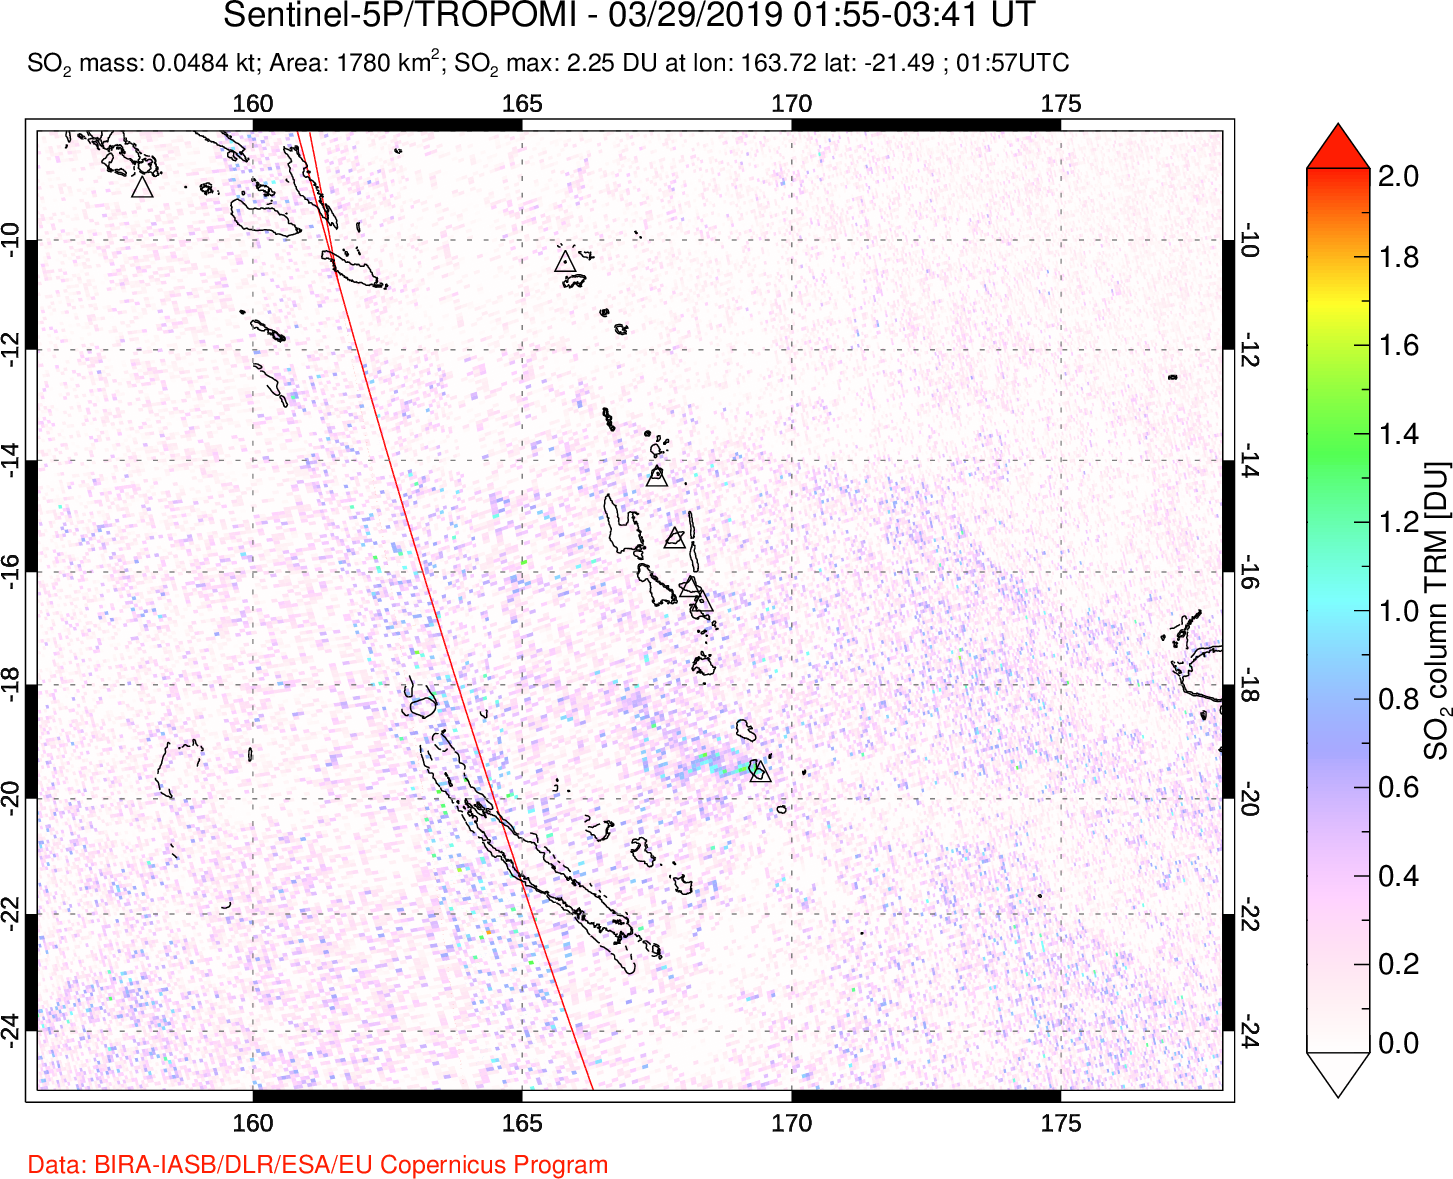 A sulfur dioxide image over Vanuatu, South Pacific on Mar 29, 2019.